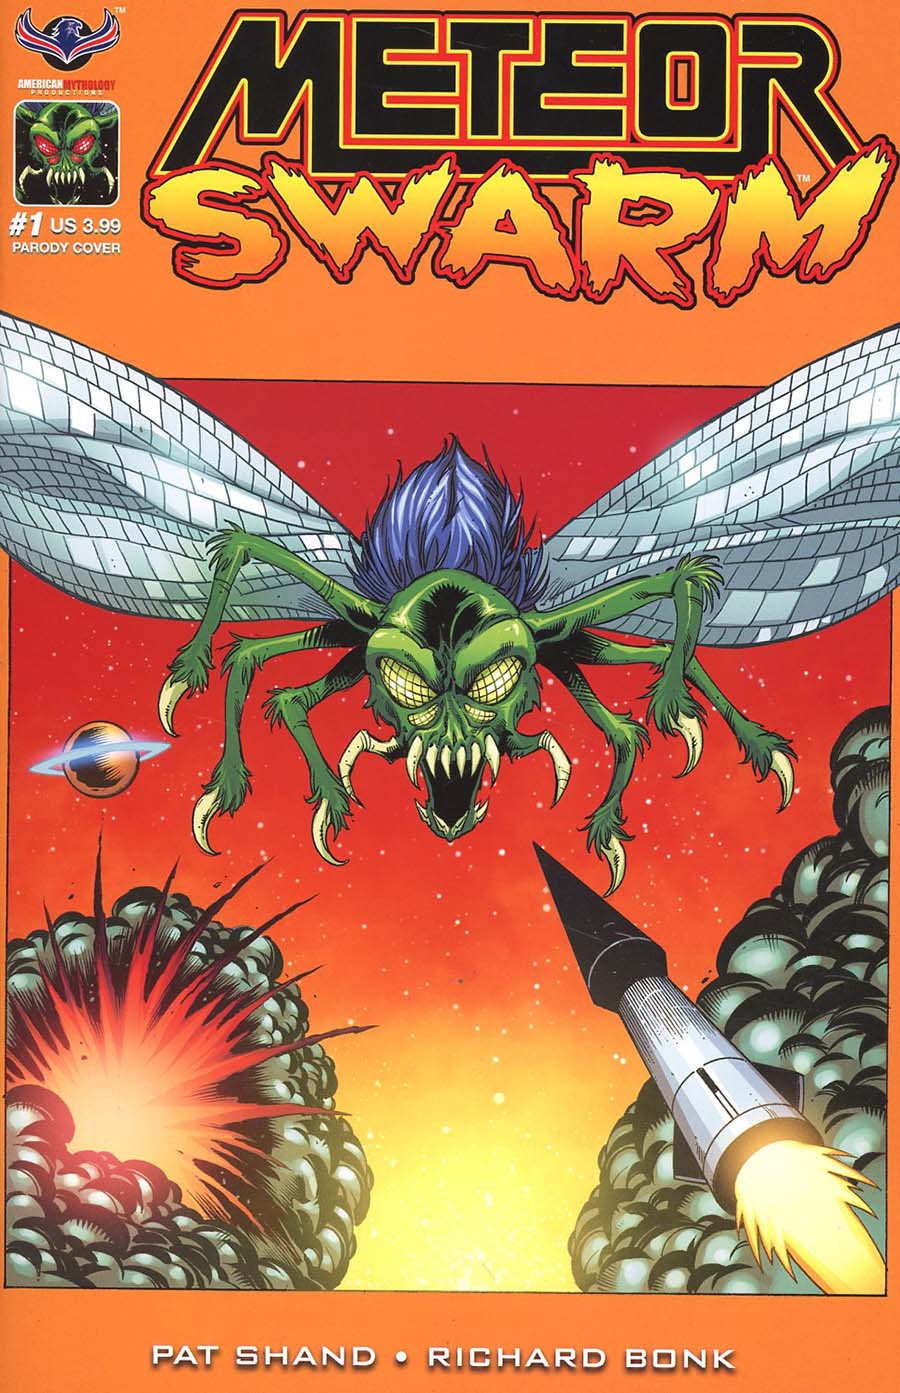 Meteor Swarm #1 Cover B Variant Richard Bonk Parody Cover